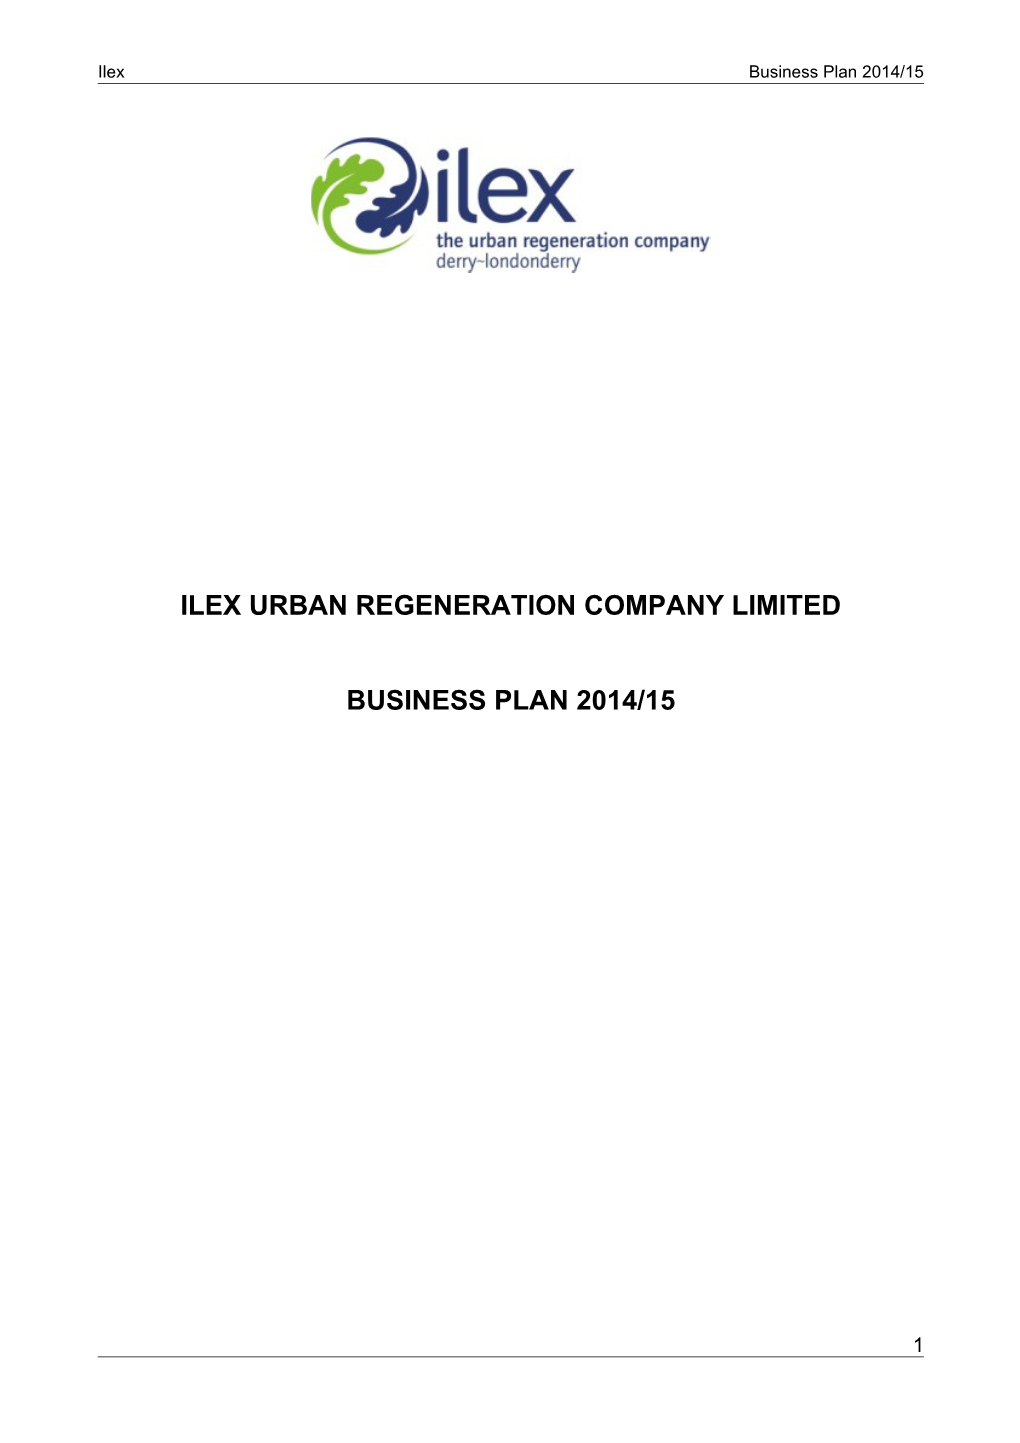 Ilex Urban Regeneration Company Limited